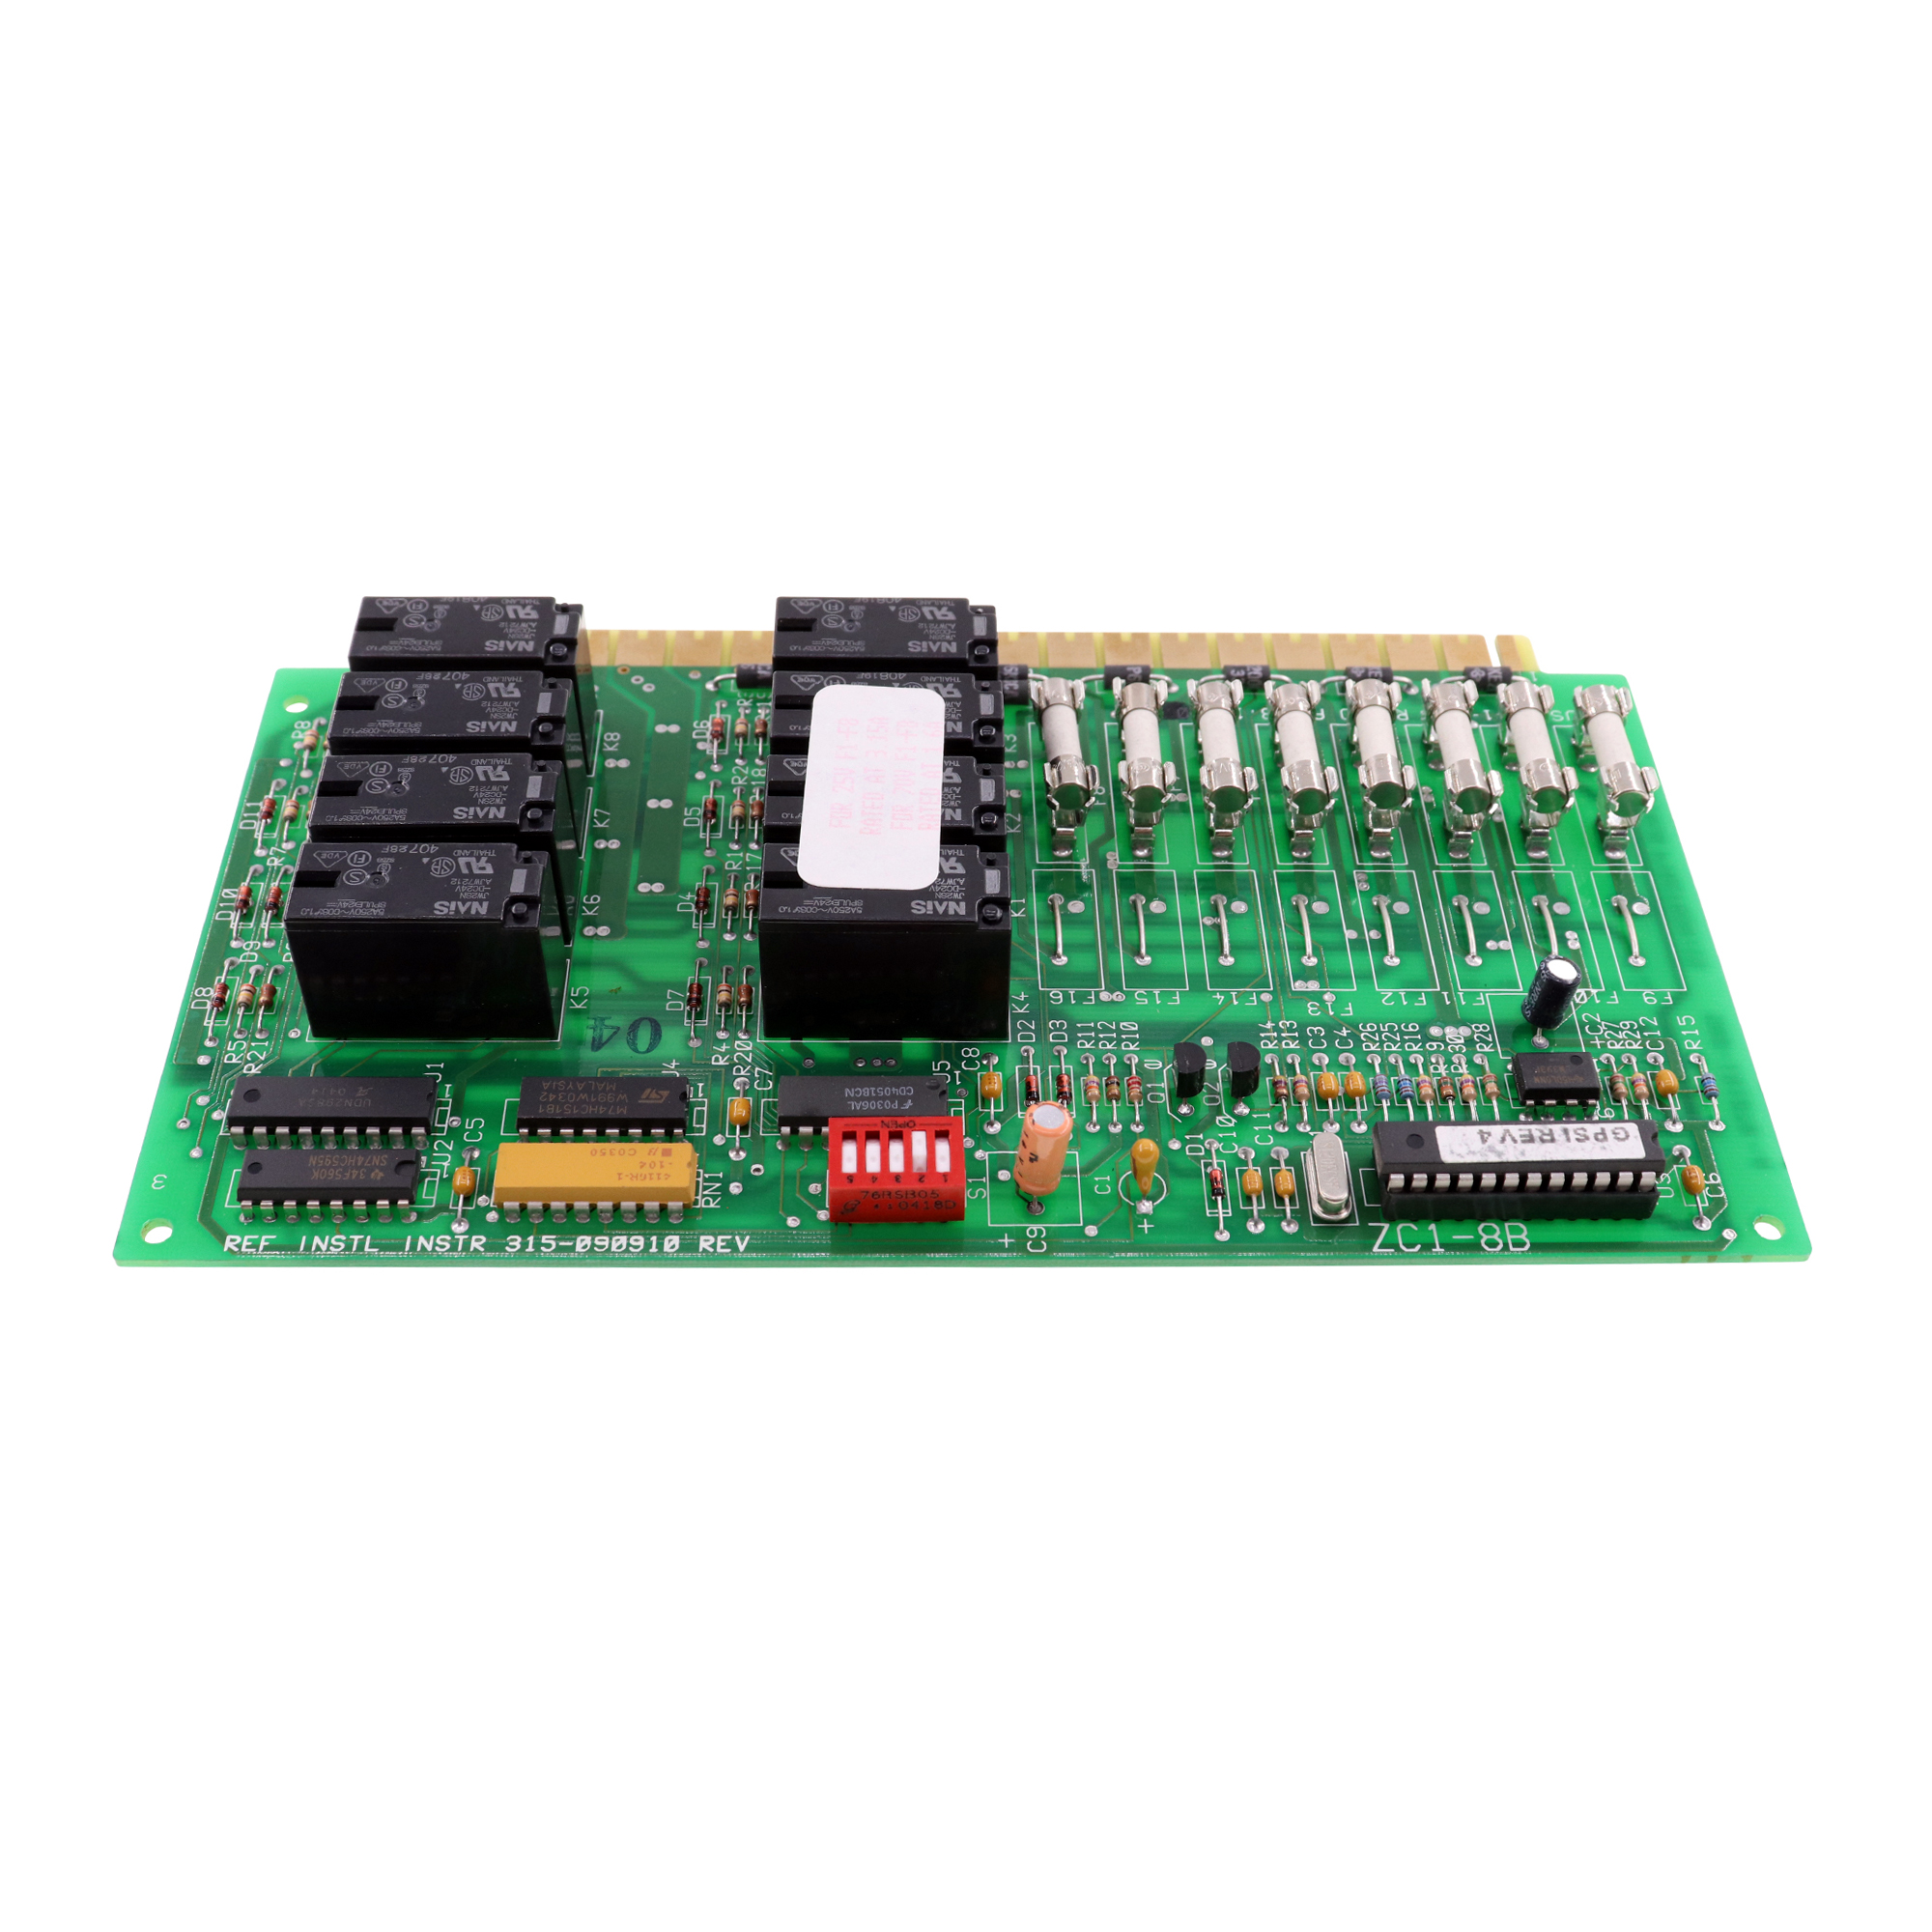 SIEMENS ZC1-8B 500-893957 ZONE CONTROL CARD MODULE CIRCUIT BOARD